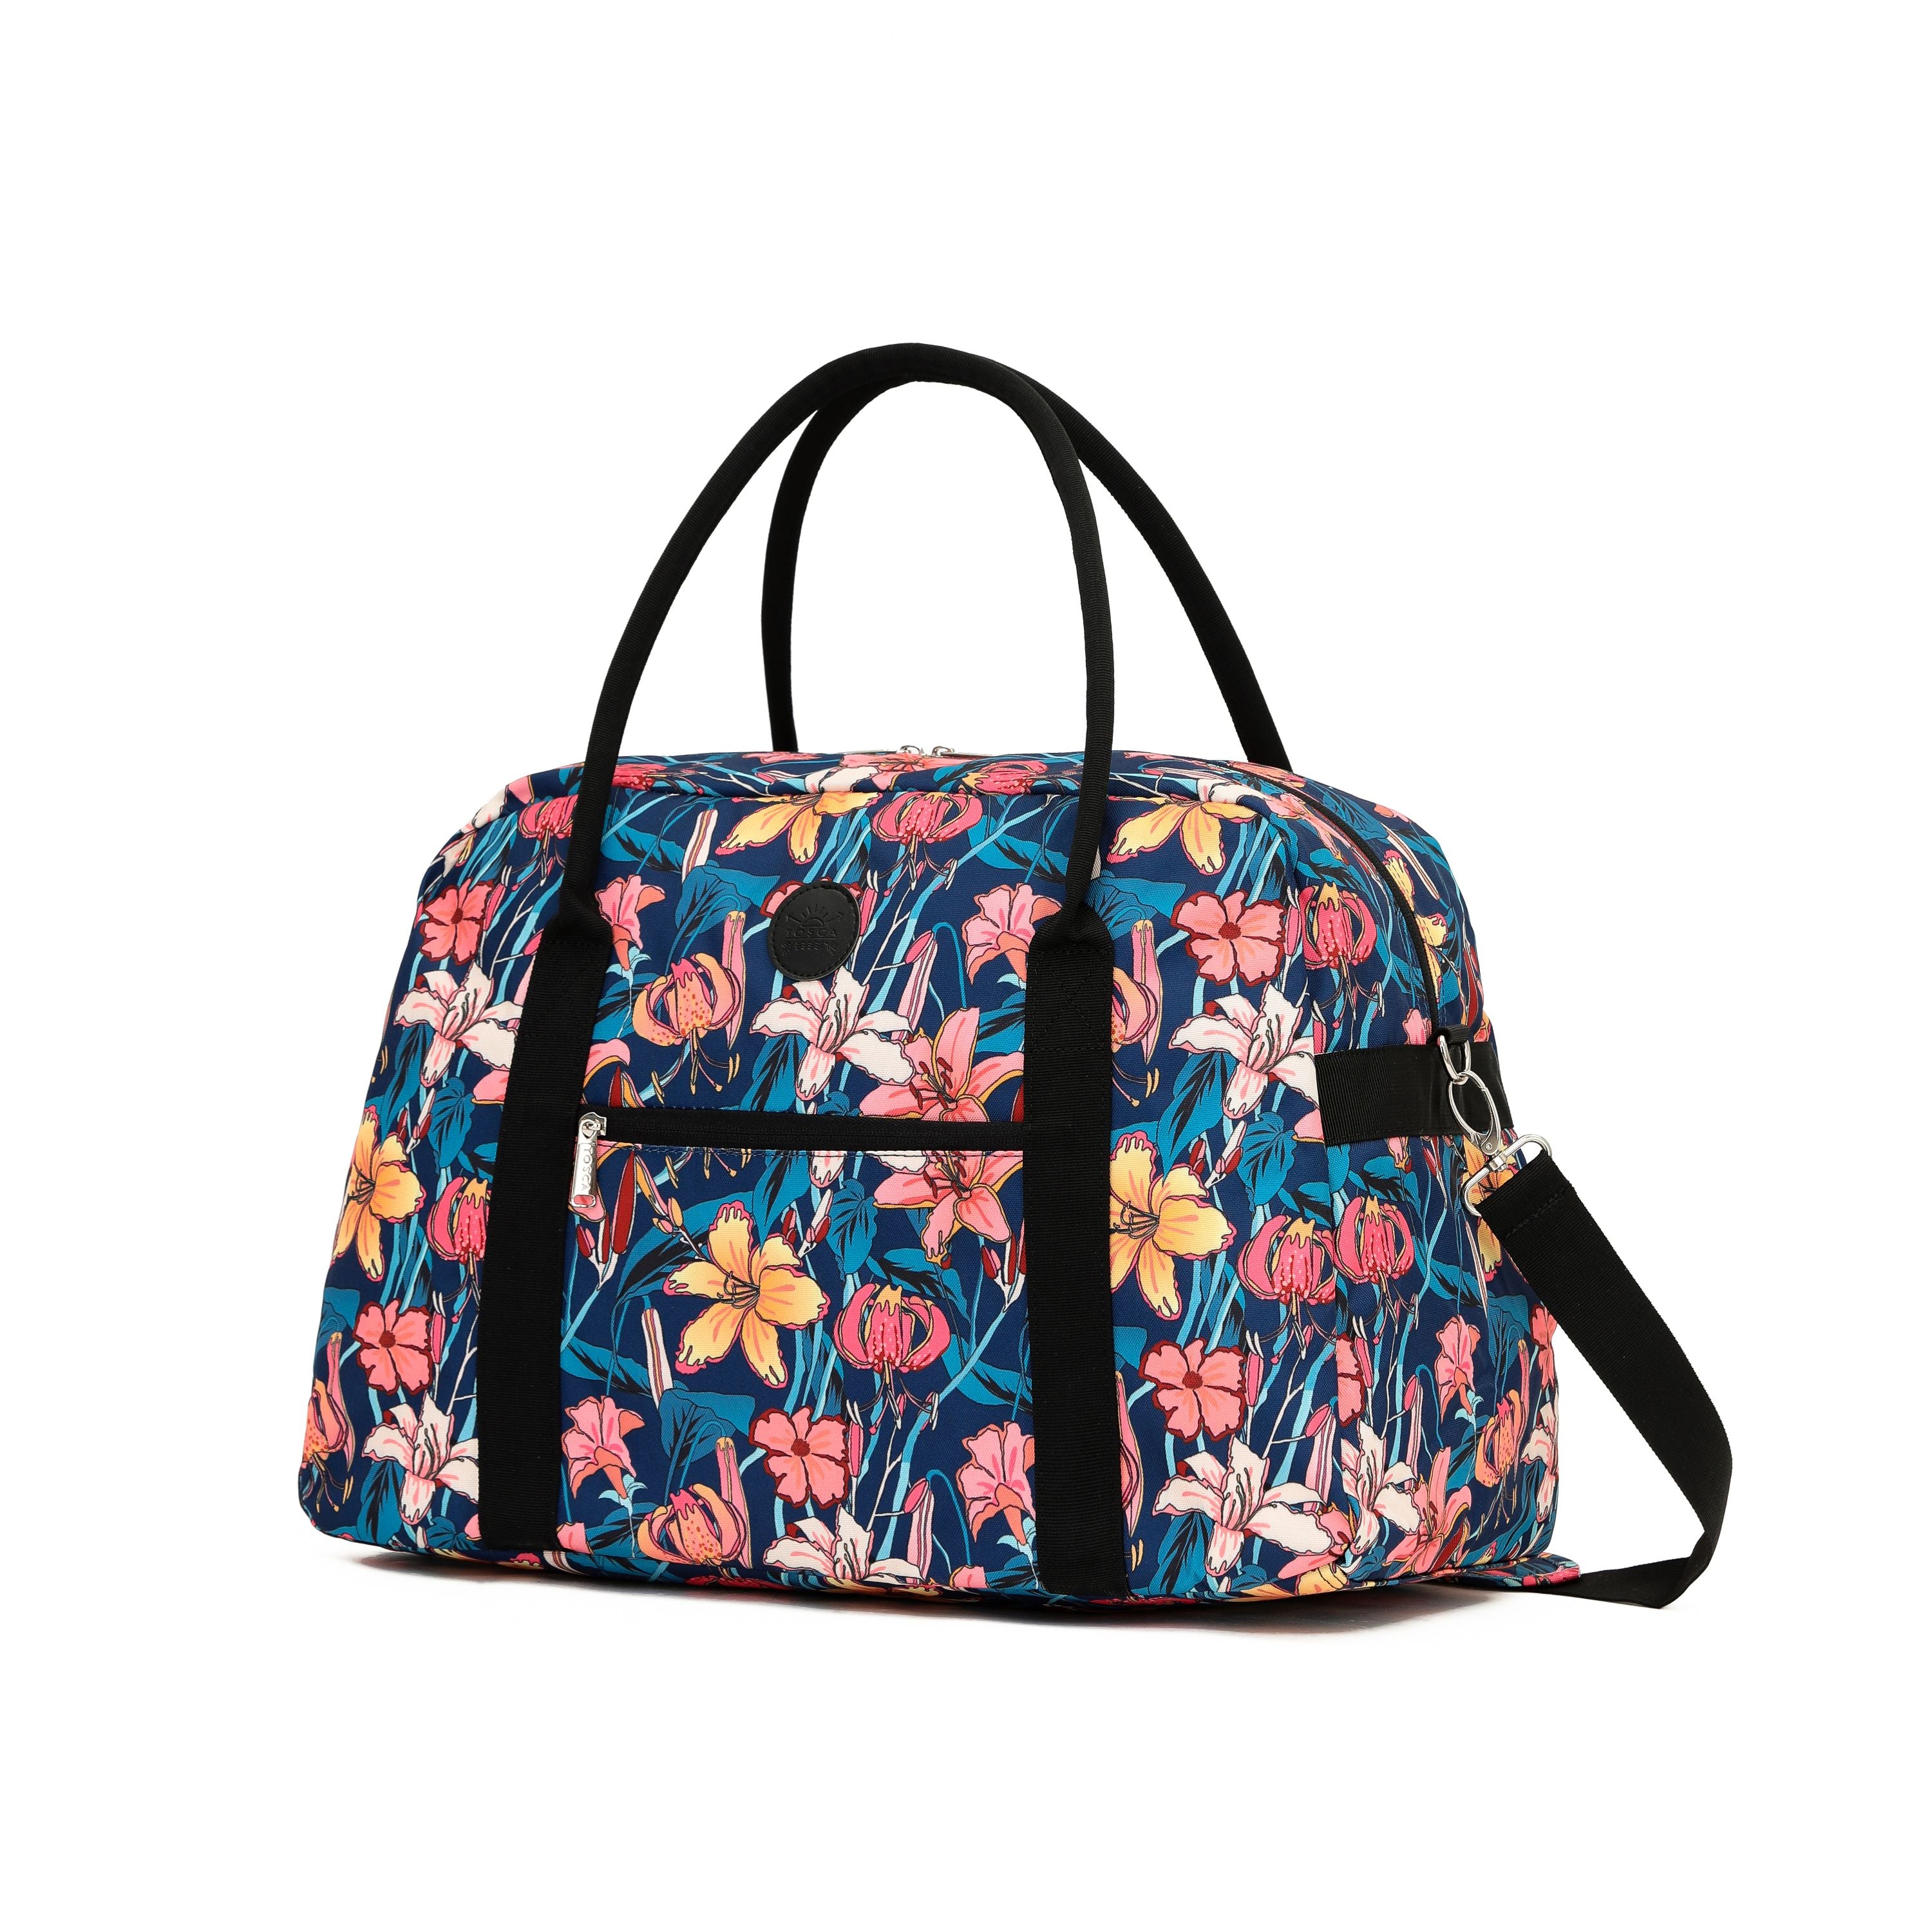 Tosca - TCA935 Fashion Tote/Duffle Bag - Blue Flowers